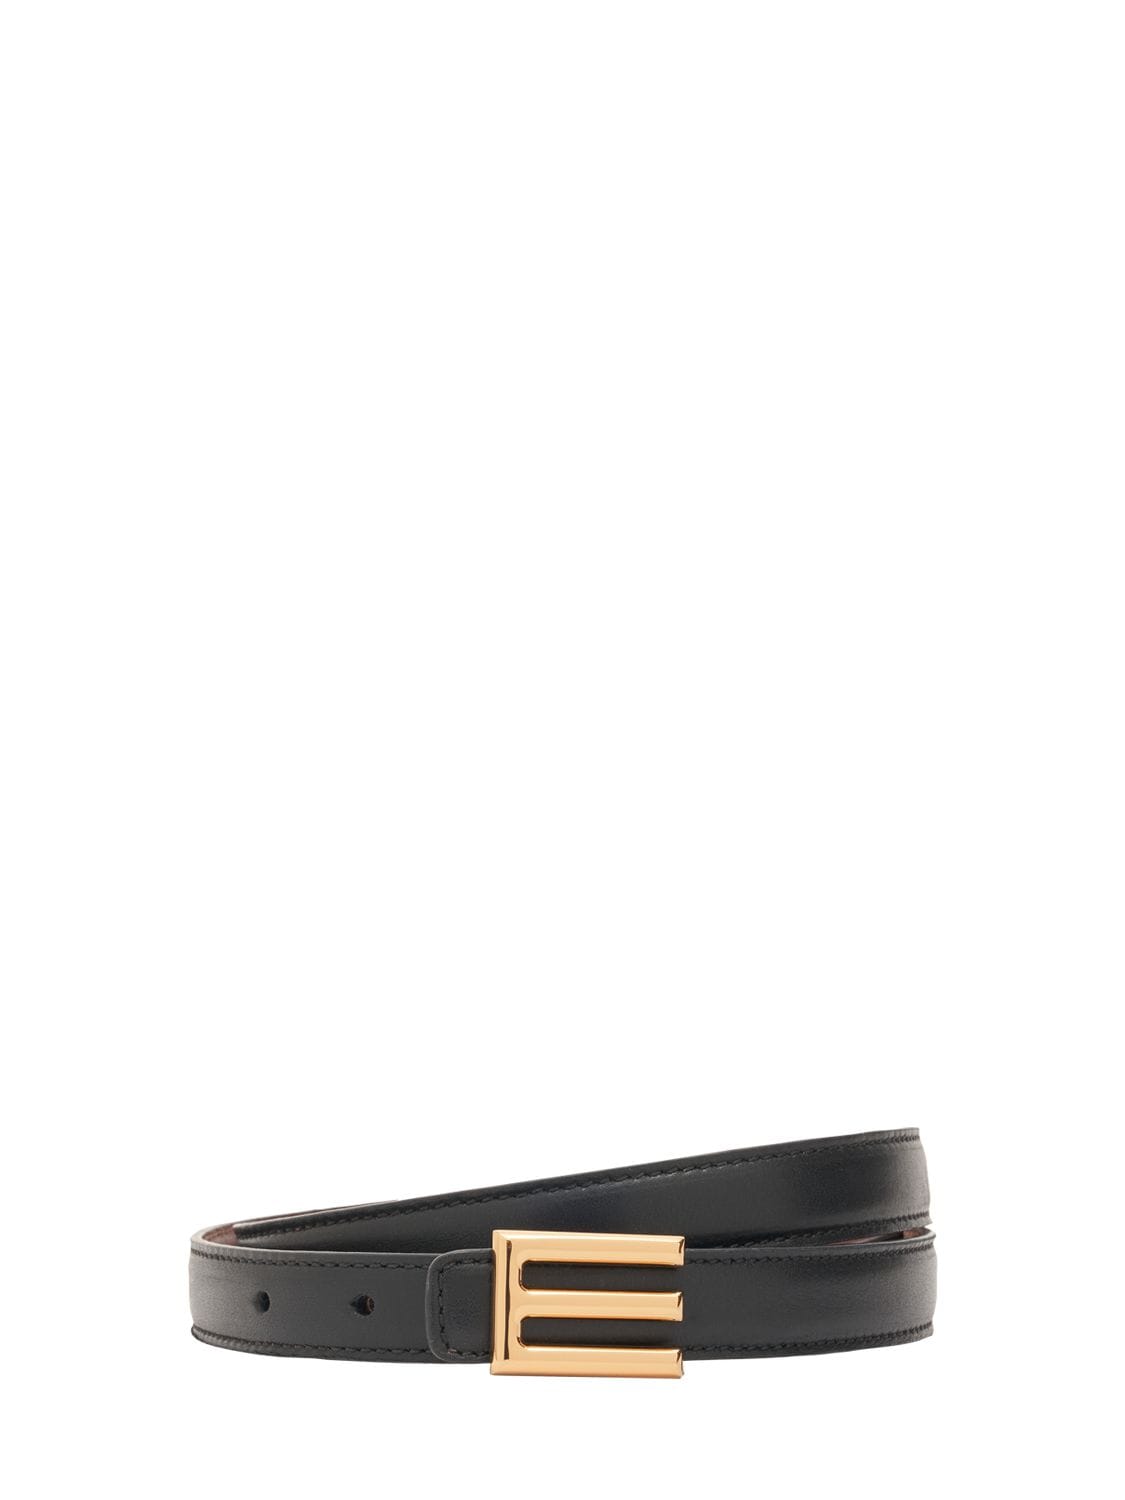 Image of Reversible Leather Belt